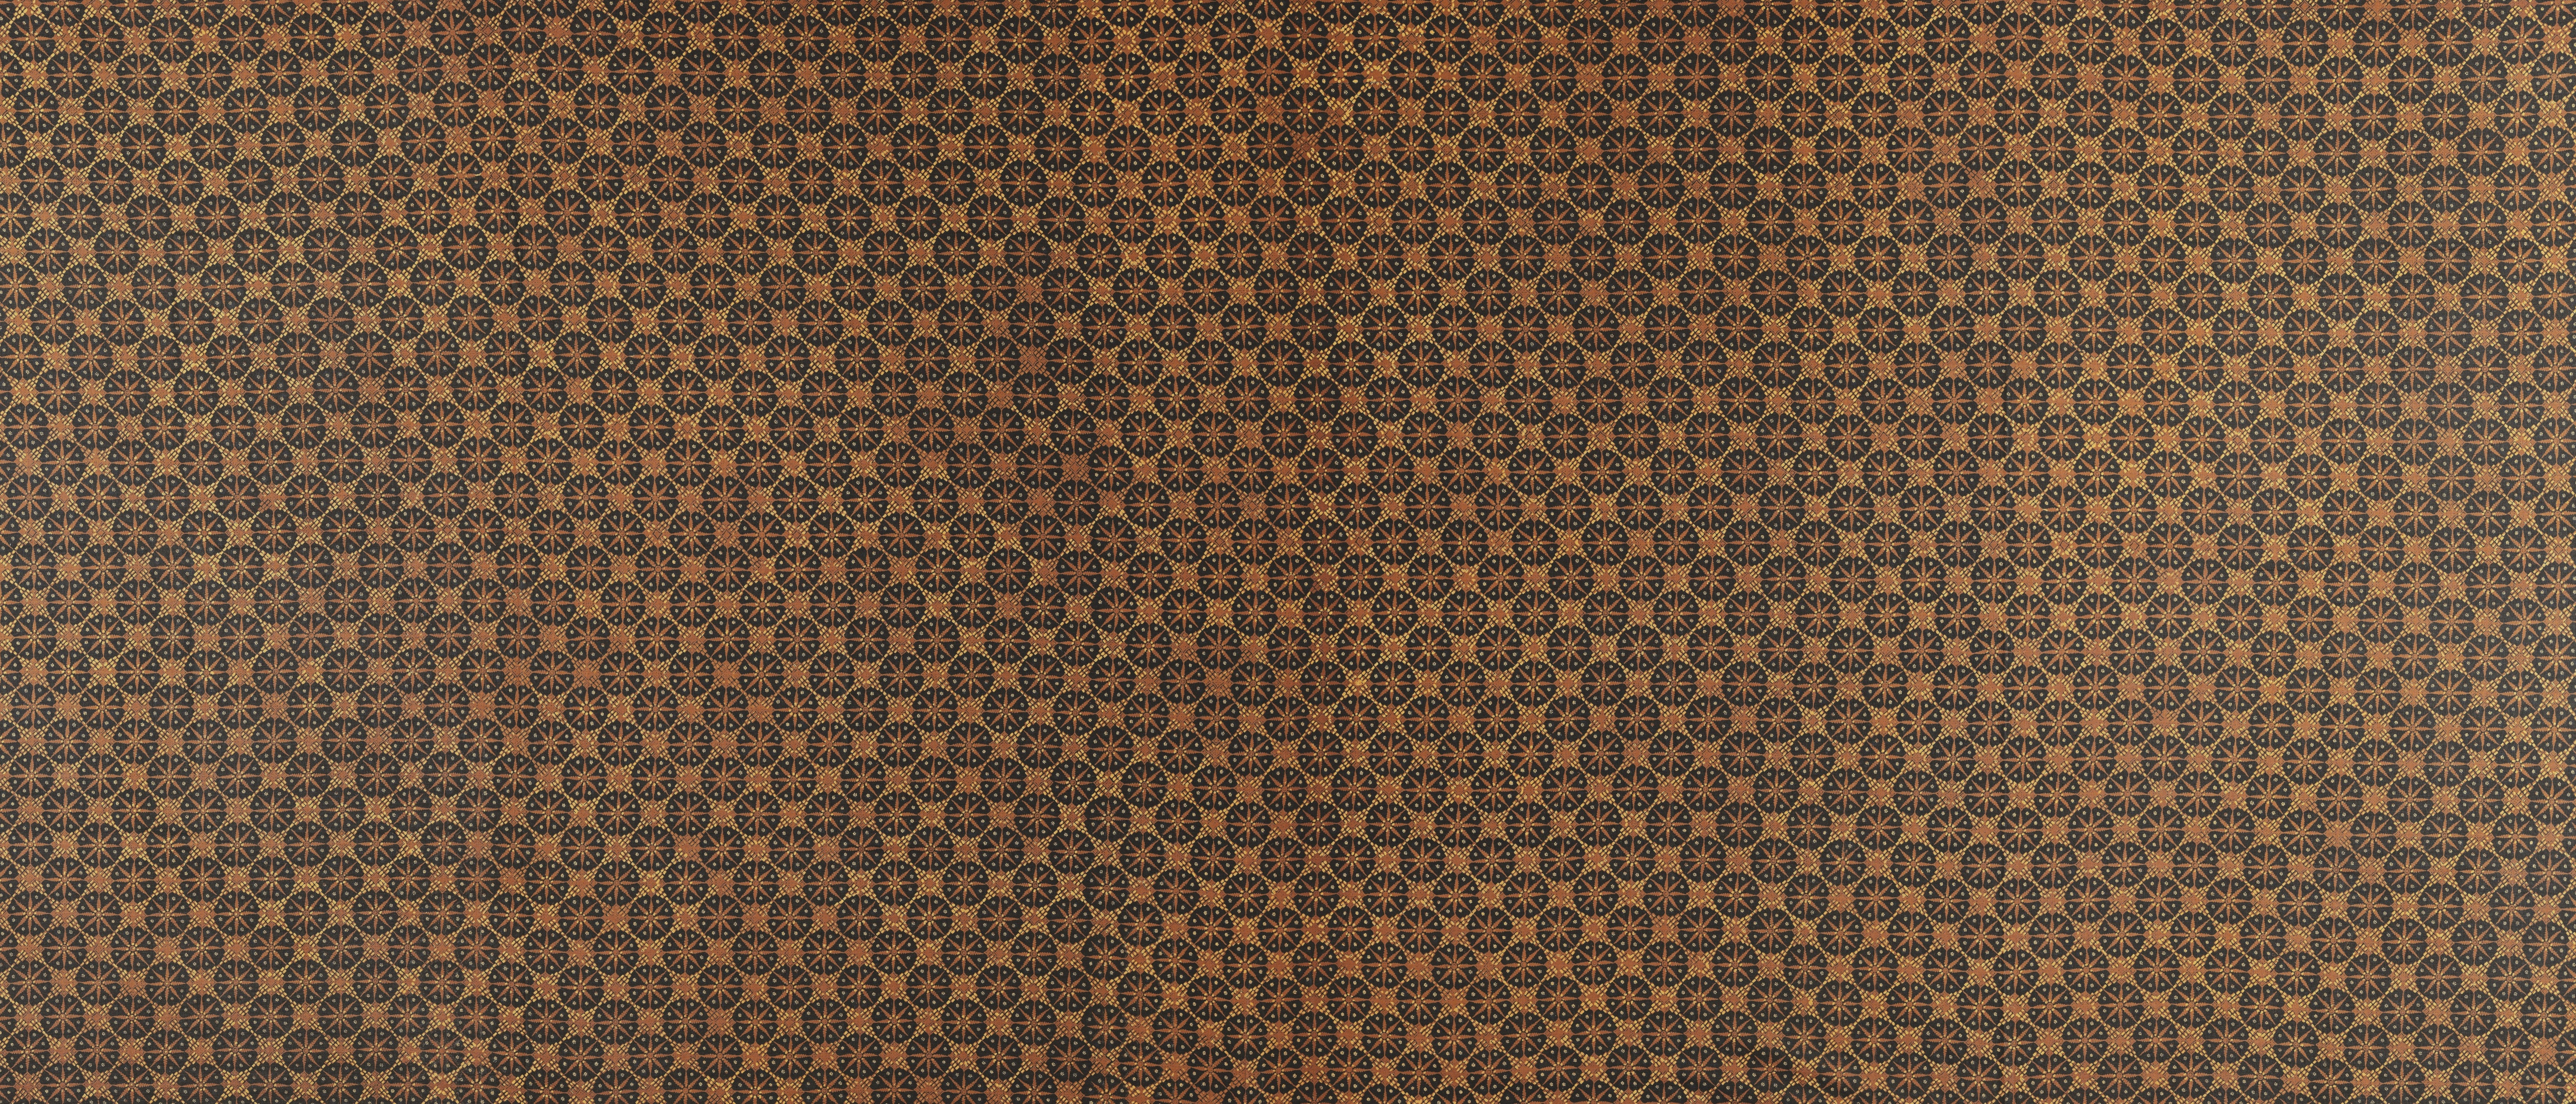 General 5871x2516 ultrawide fabric texture pattern symmetry digital art